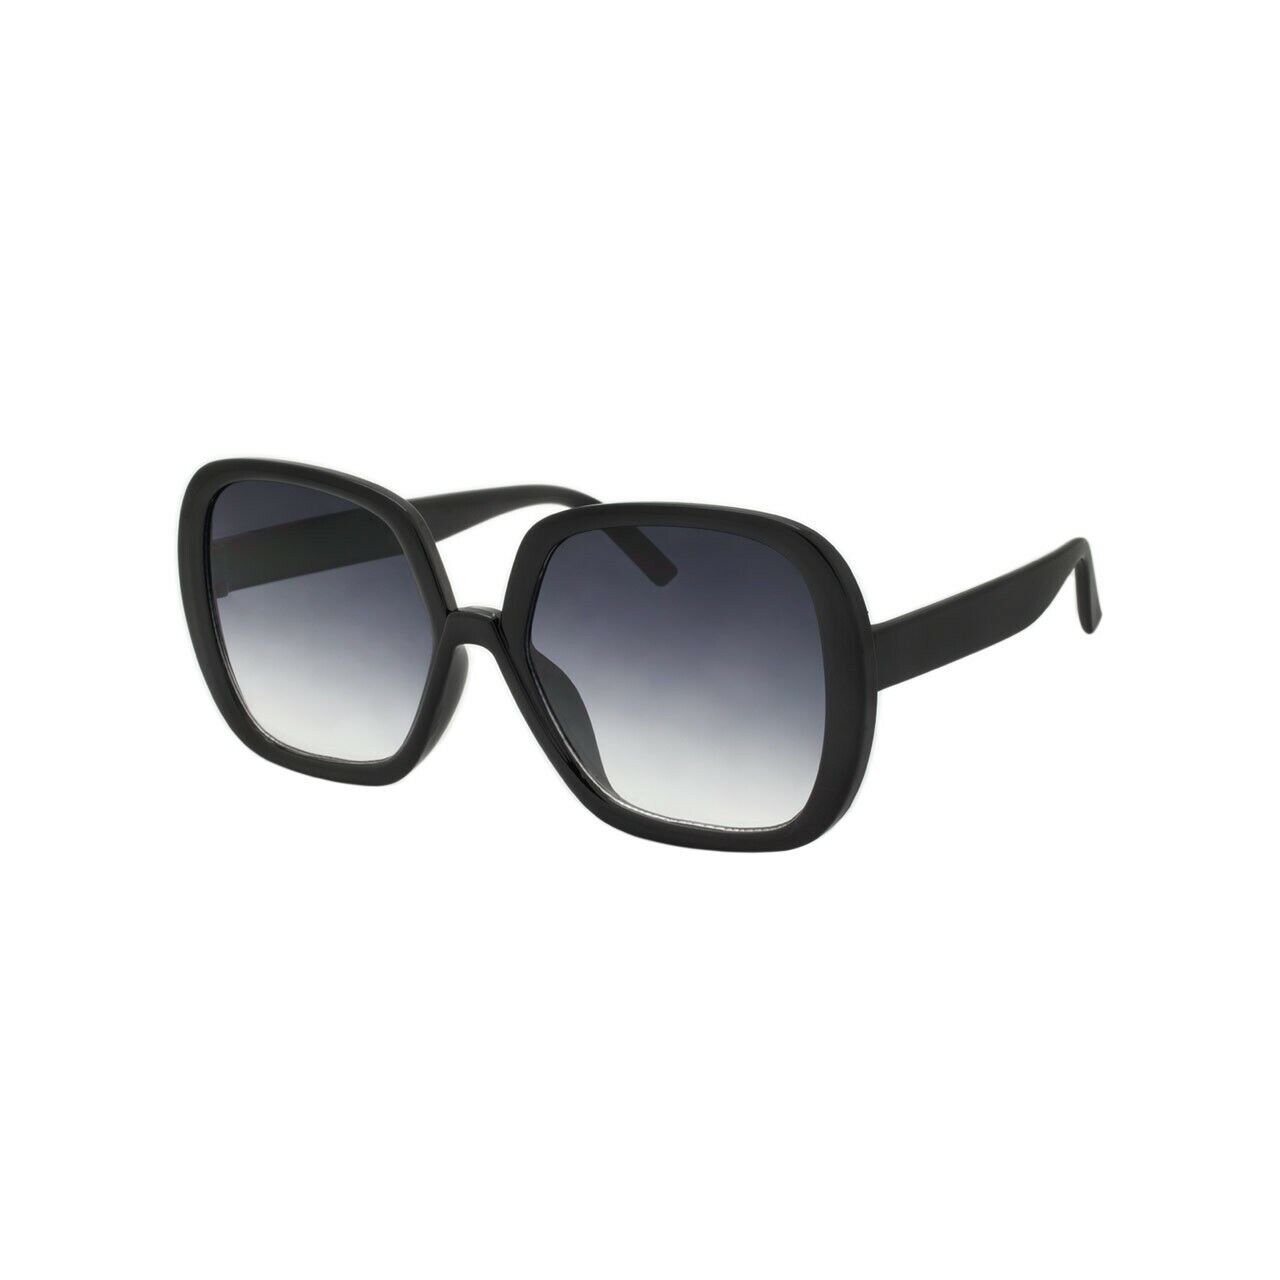 Fashion Sunglasses Wholesale Bulk Lot Sunglass 36 PCS per Box Exactly As Picture